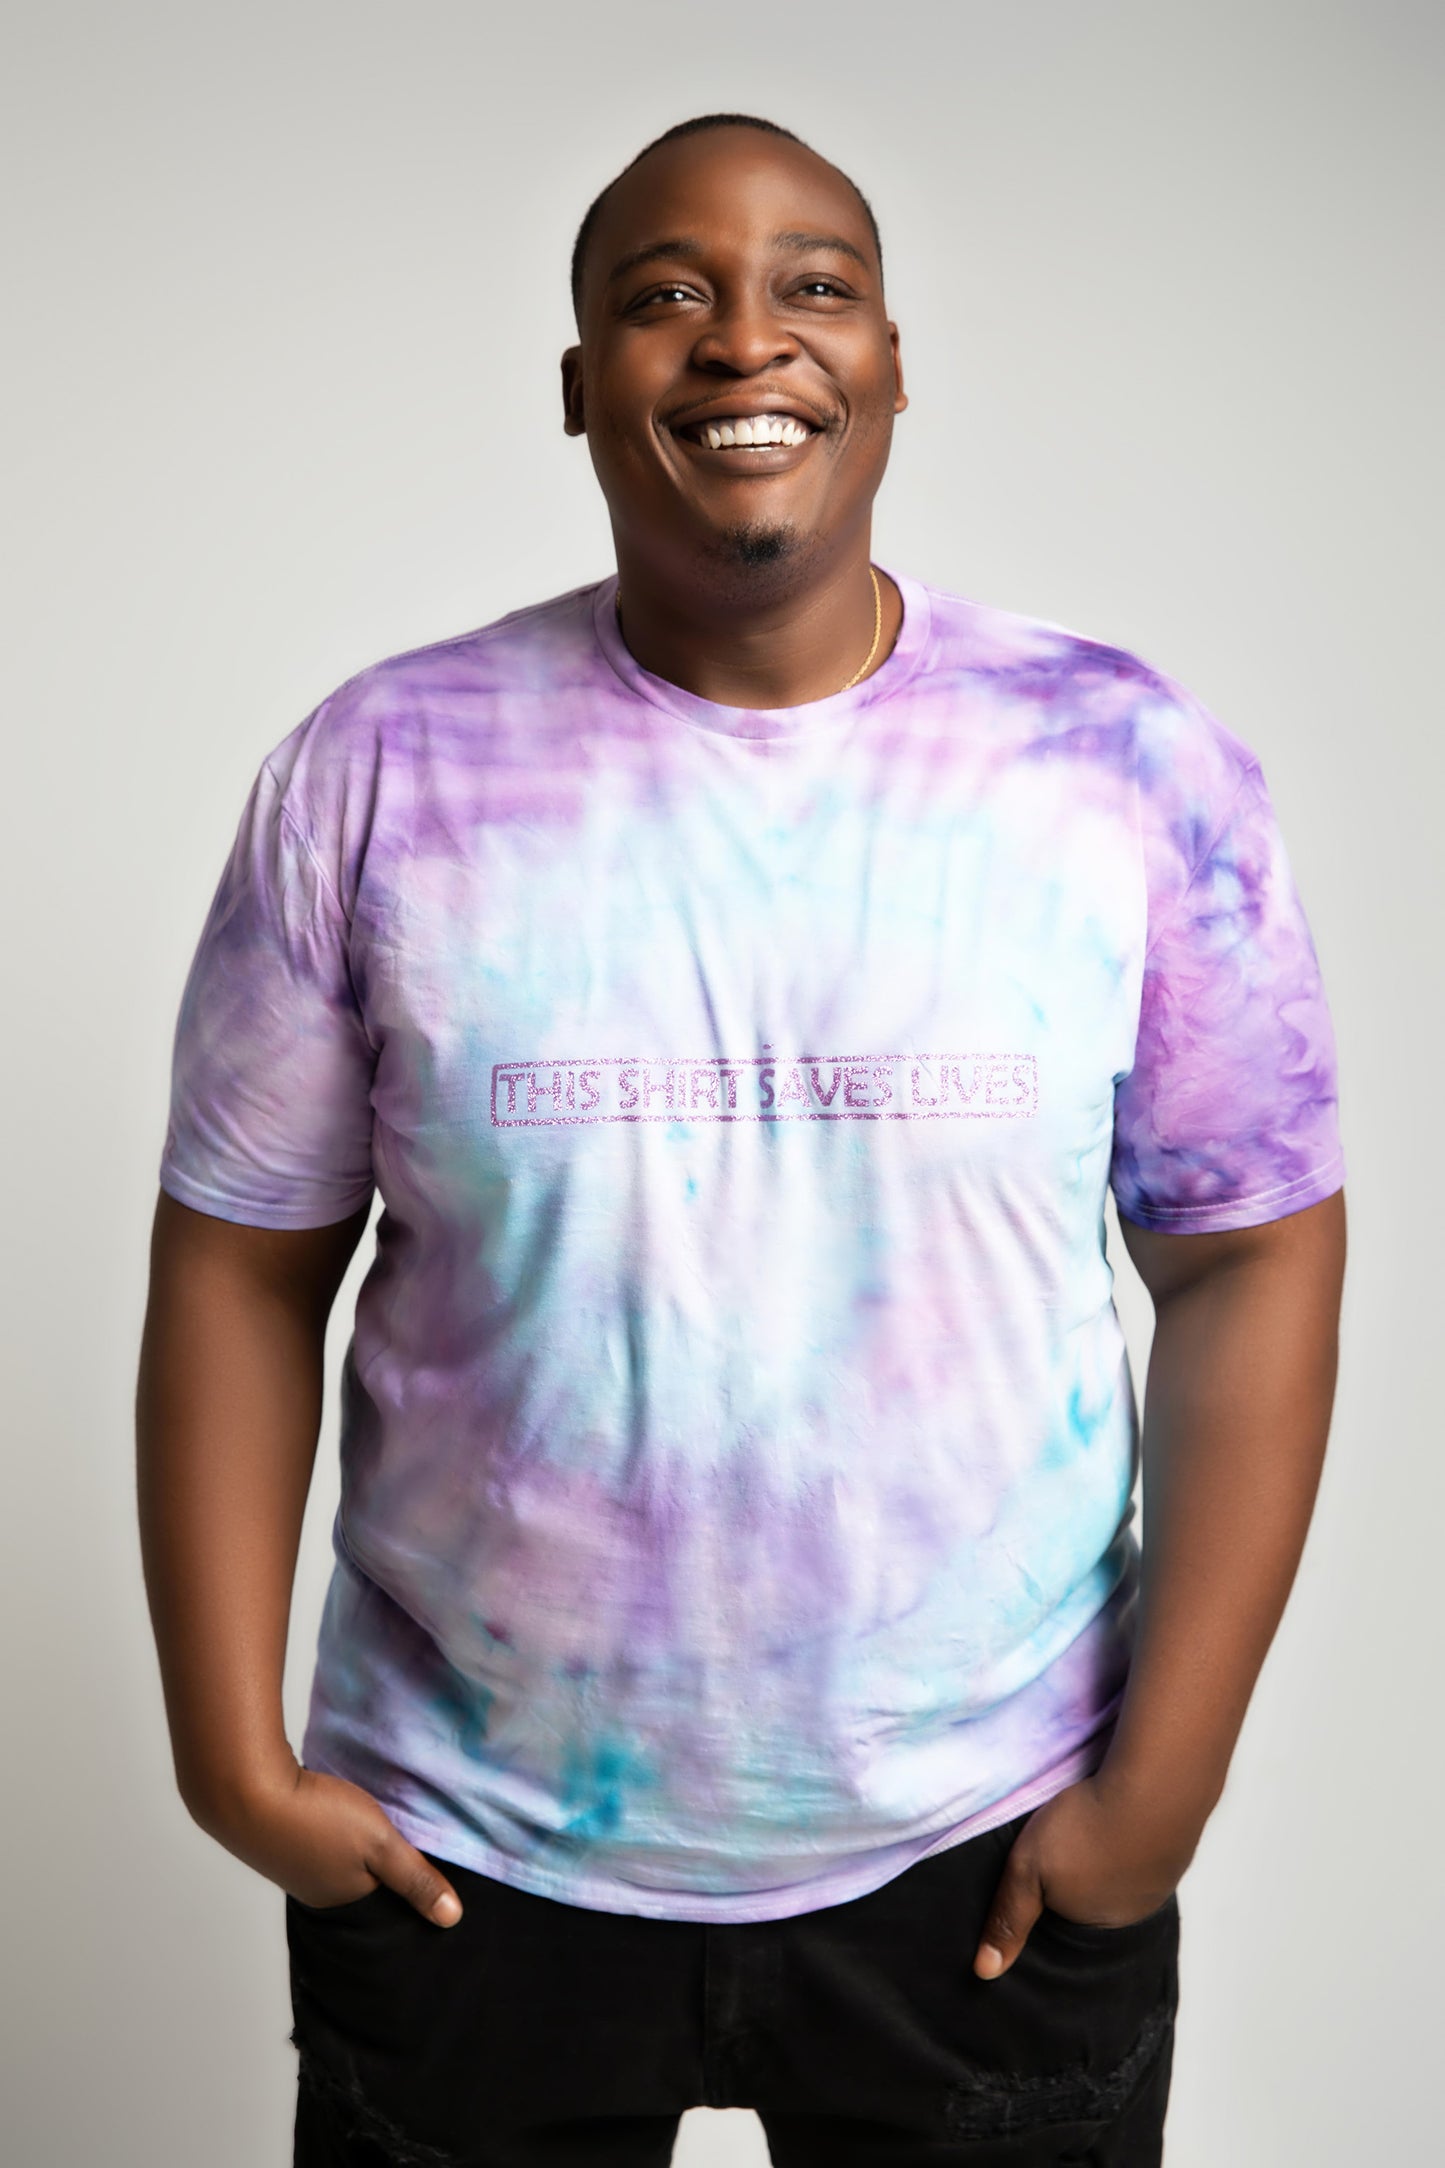 Custom Tie-Dye Suicide Awareness Tee - This Shirt Saves Lives